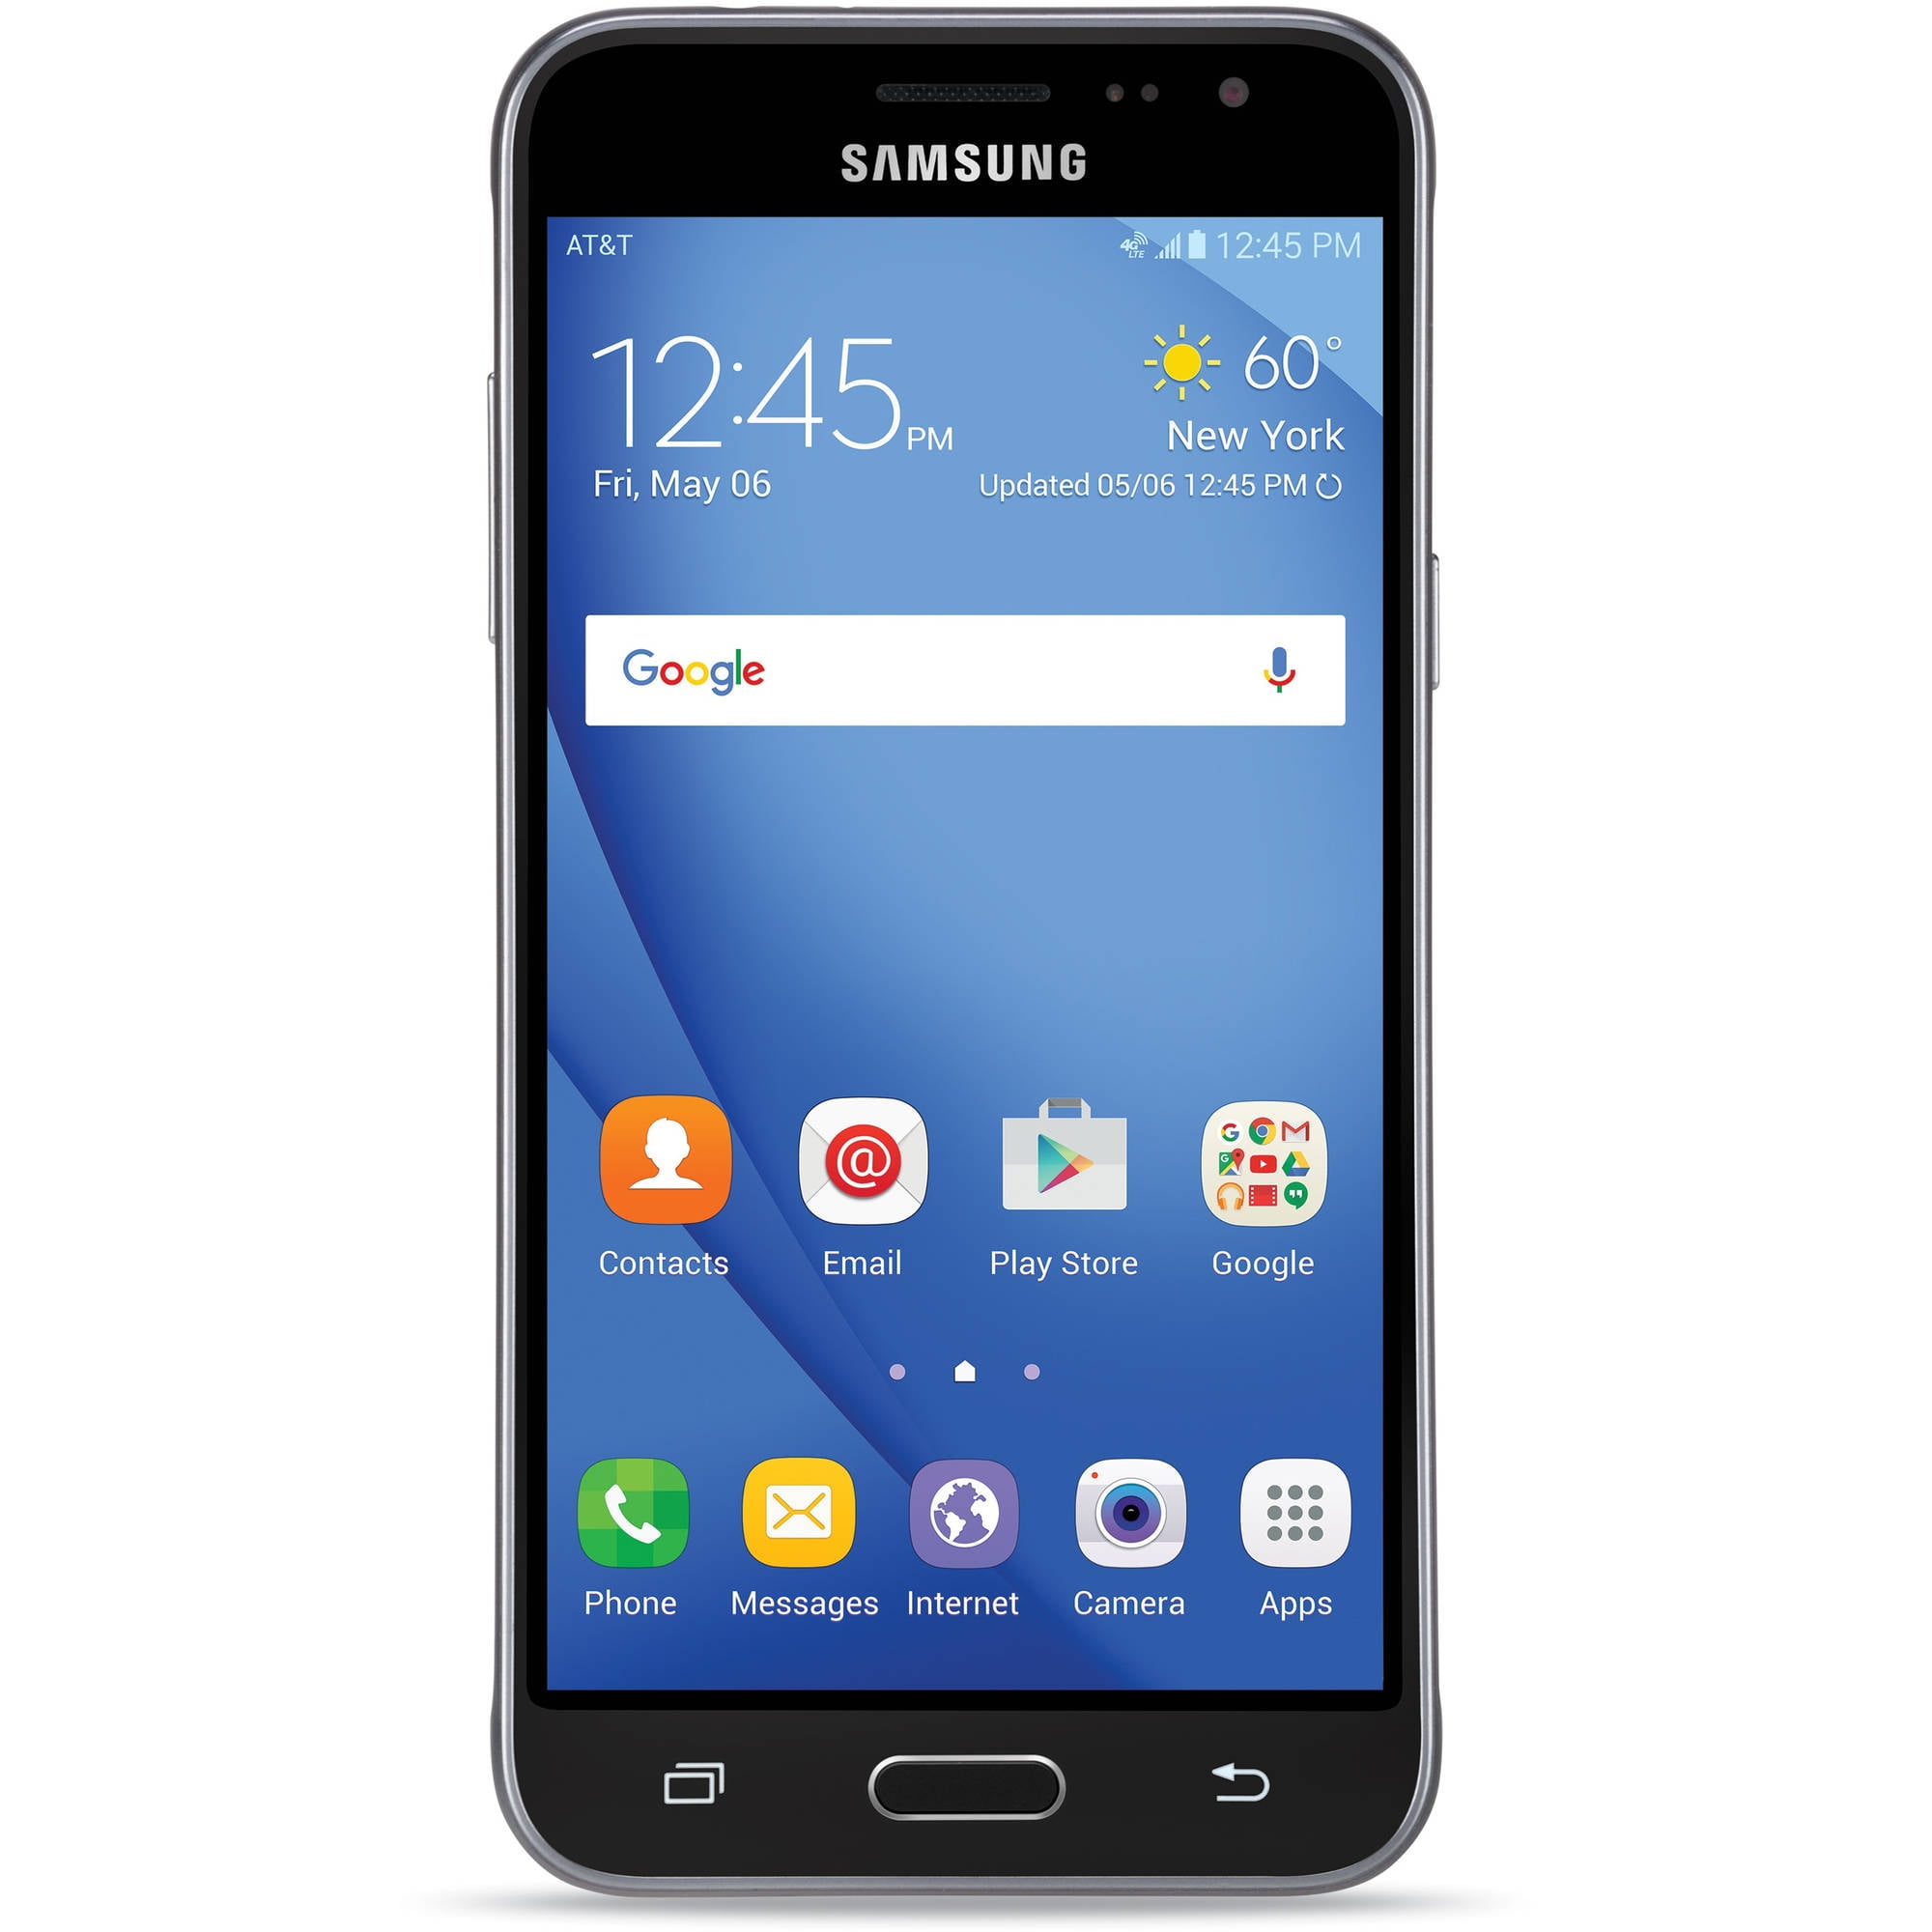 AT&T PREPAID - Samsung Galaxy Express Prime 2